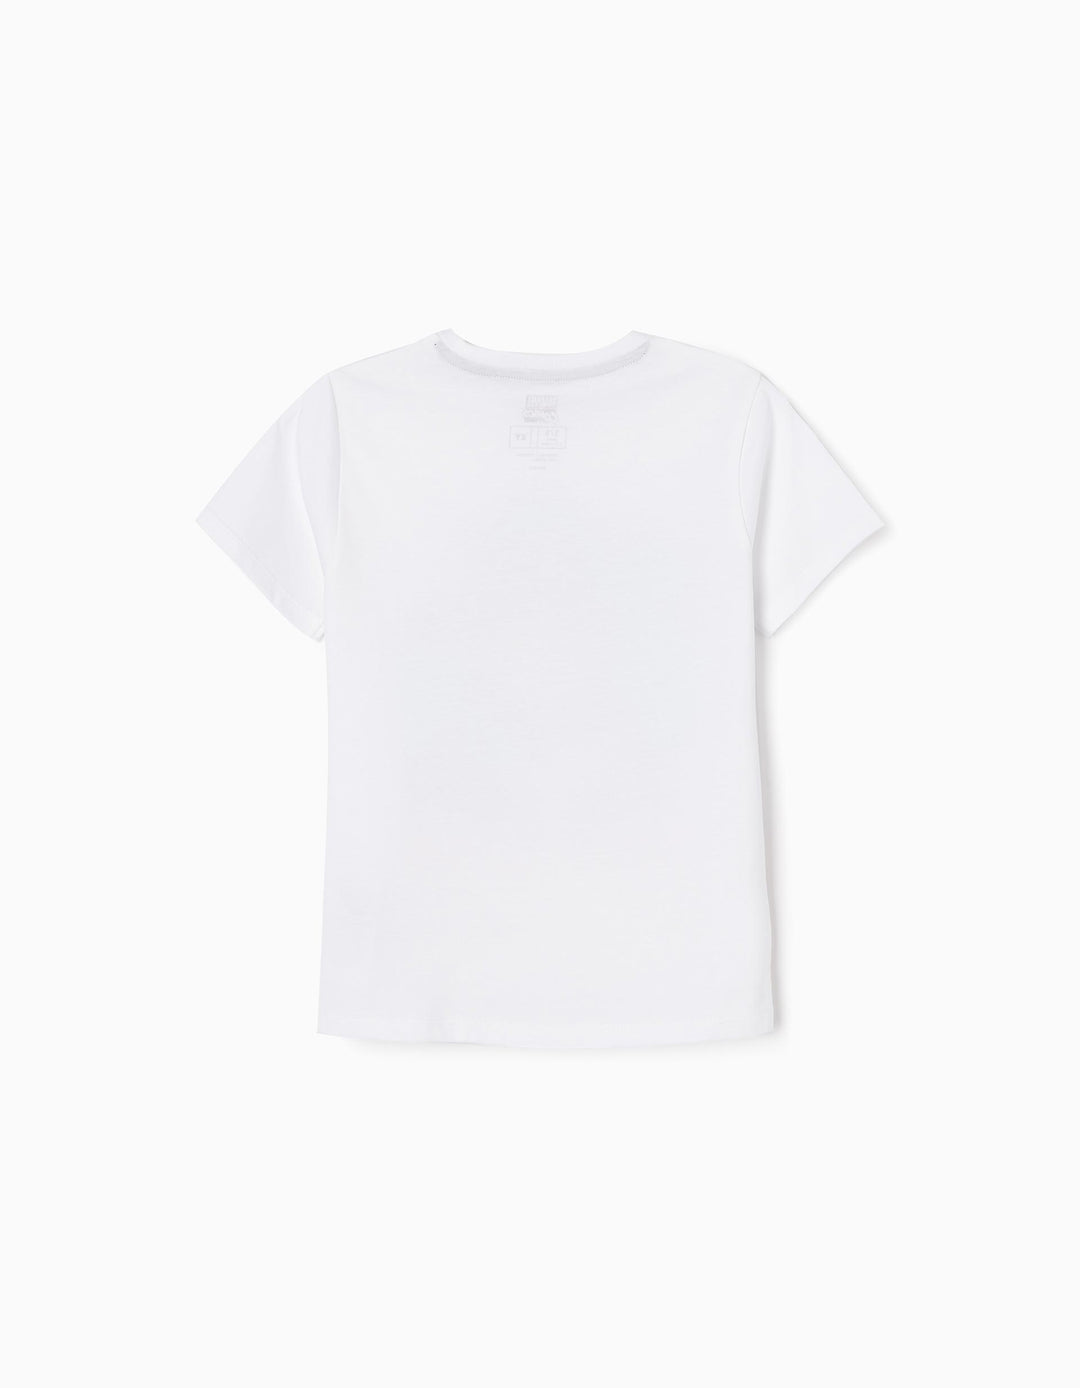 Cotton T-shirt for Boys 'Captain America', White